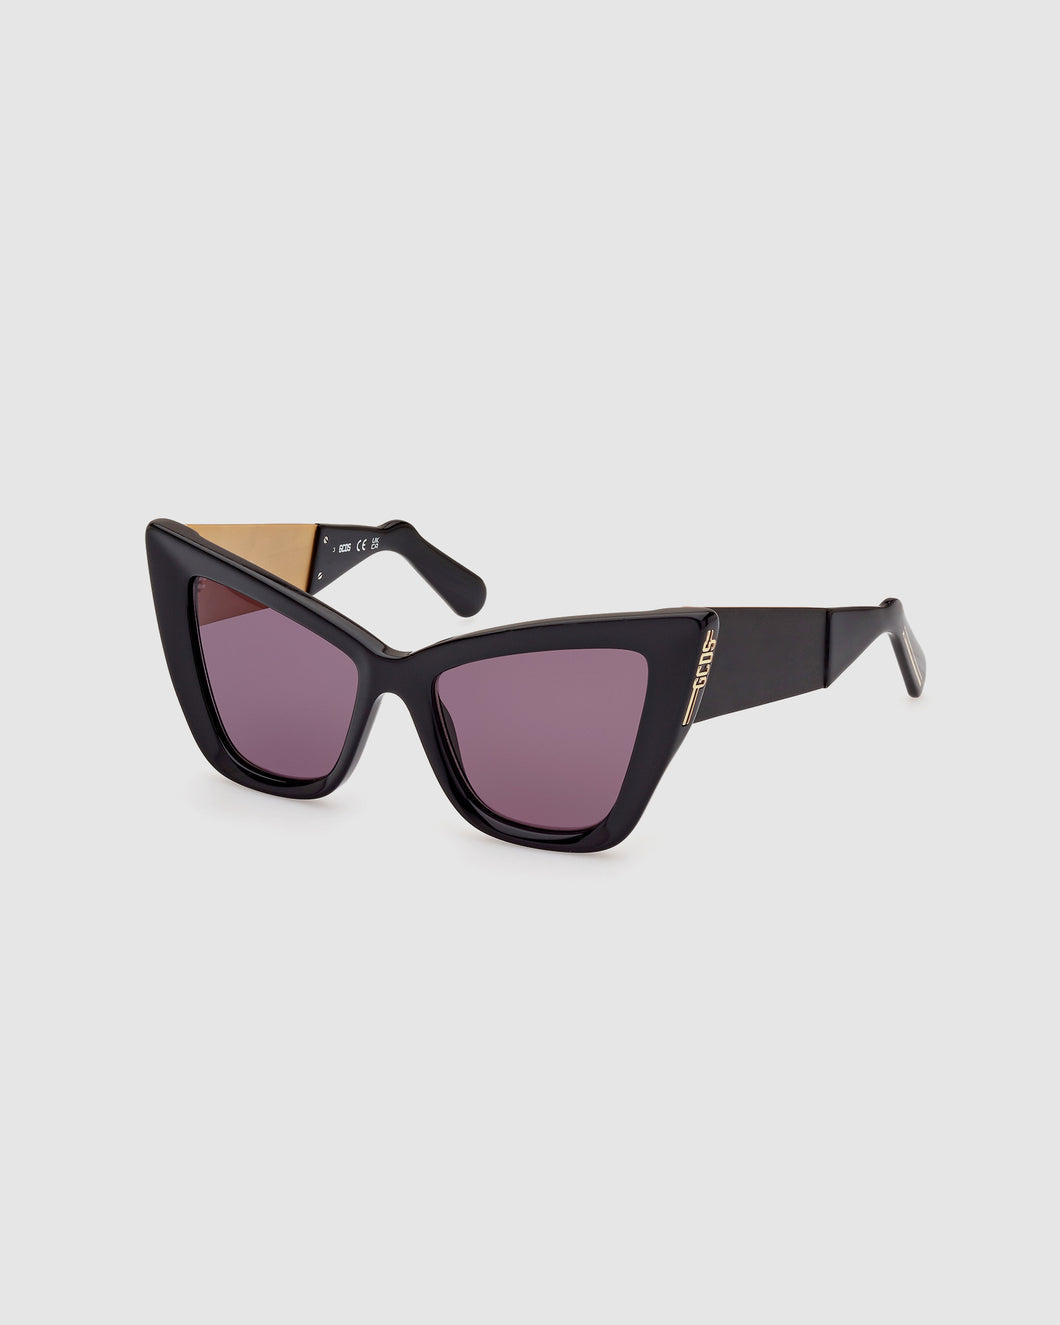 GD0026 Cat-eye sunglasses : Women Sunglasses Black  | GCDS